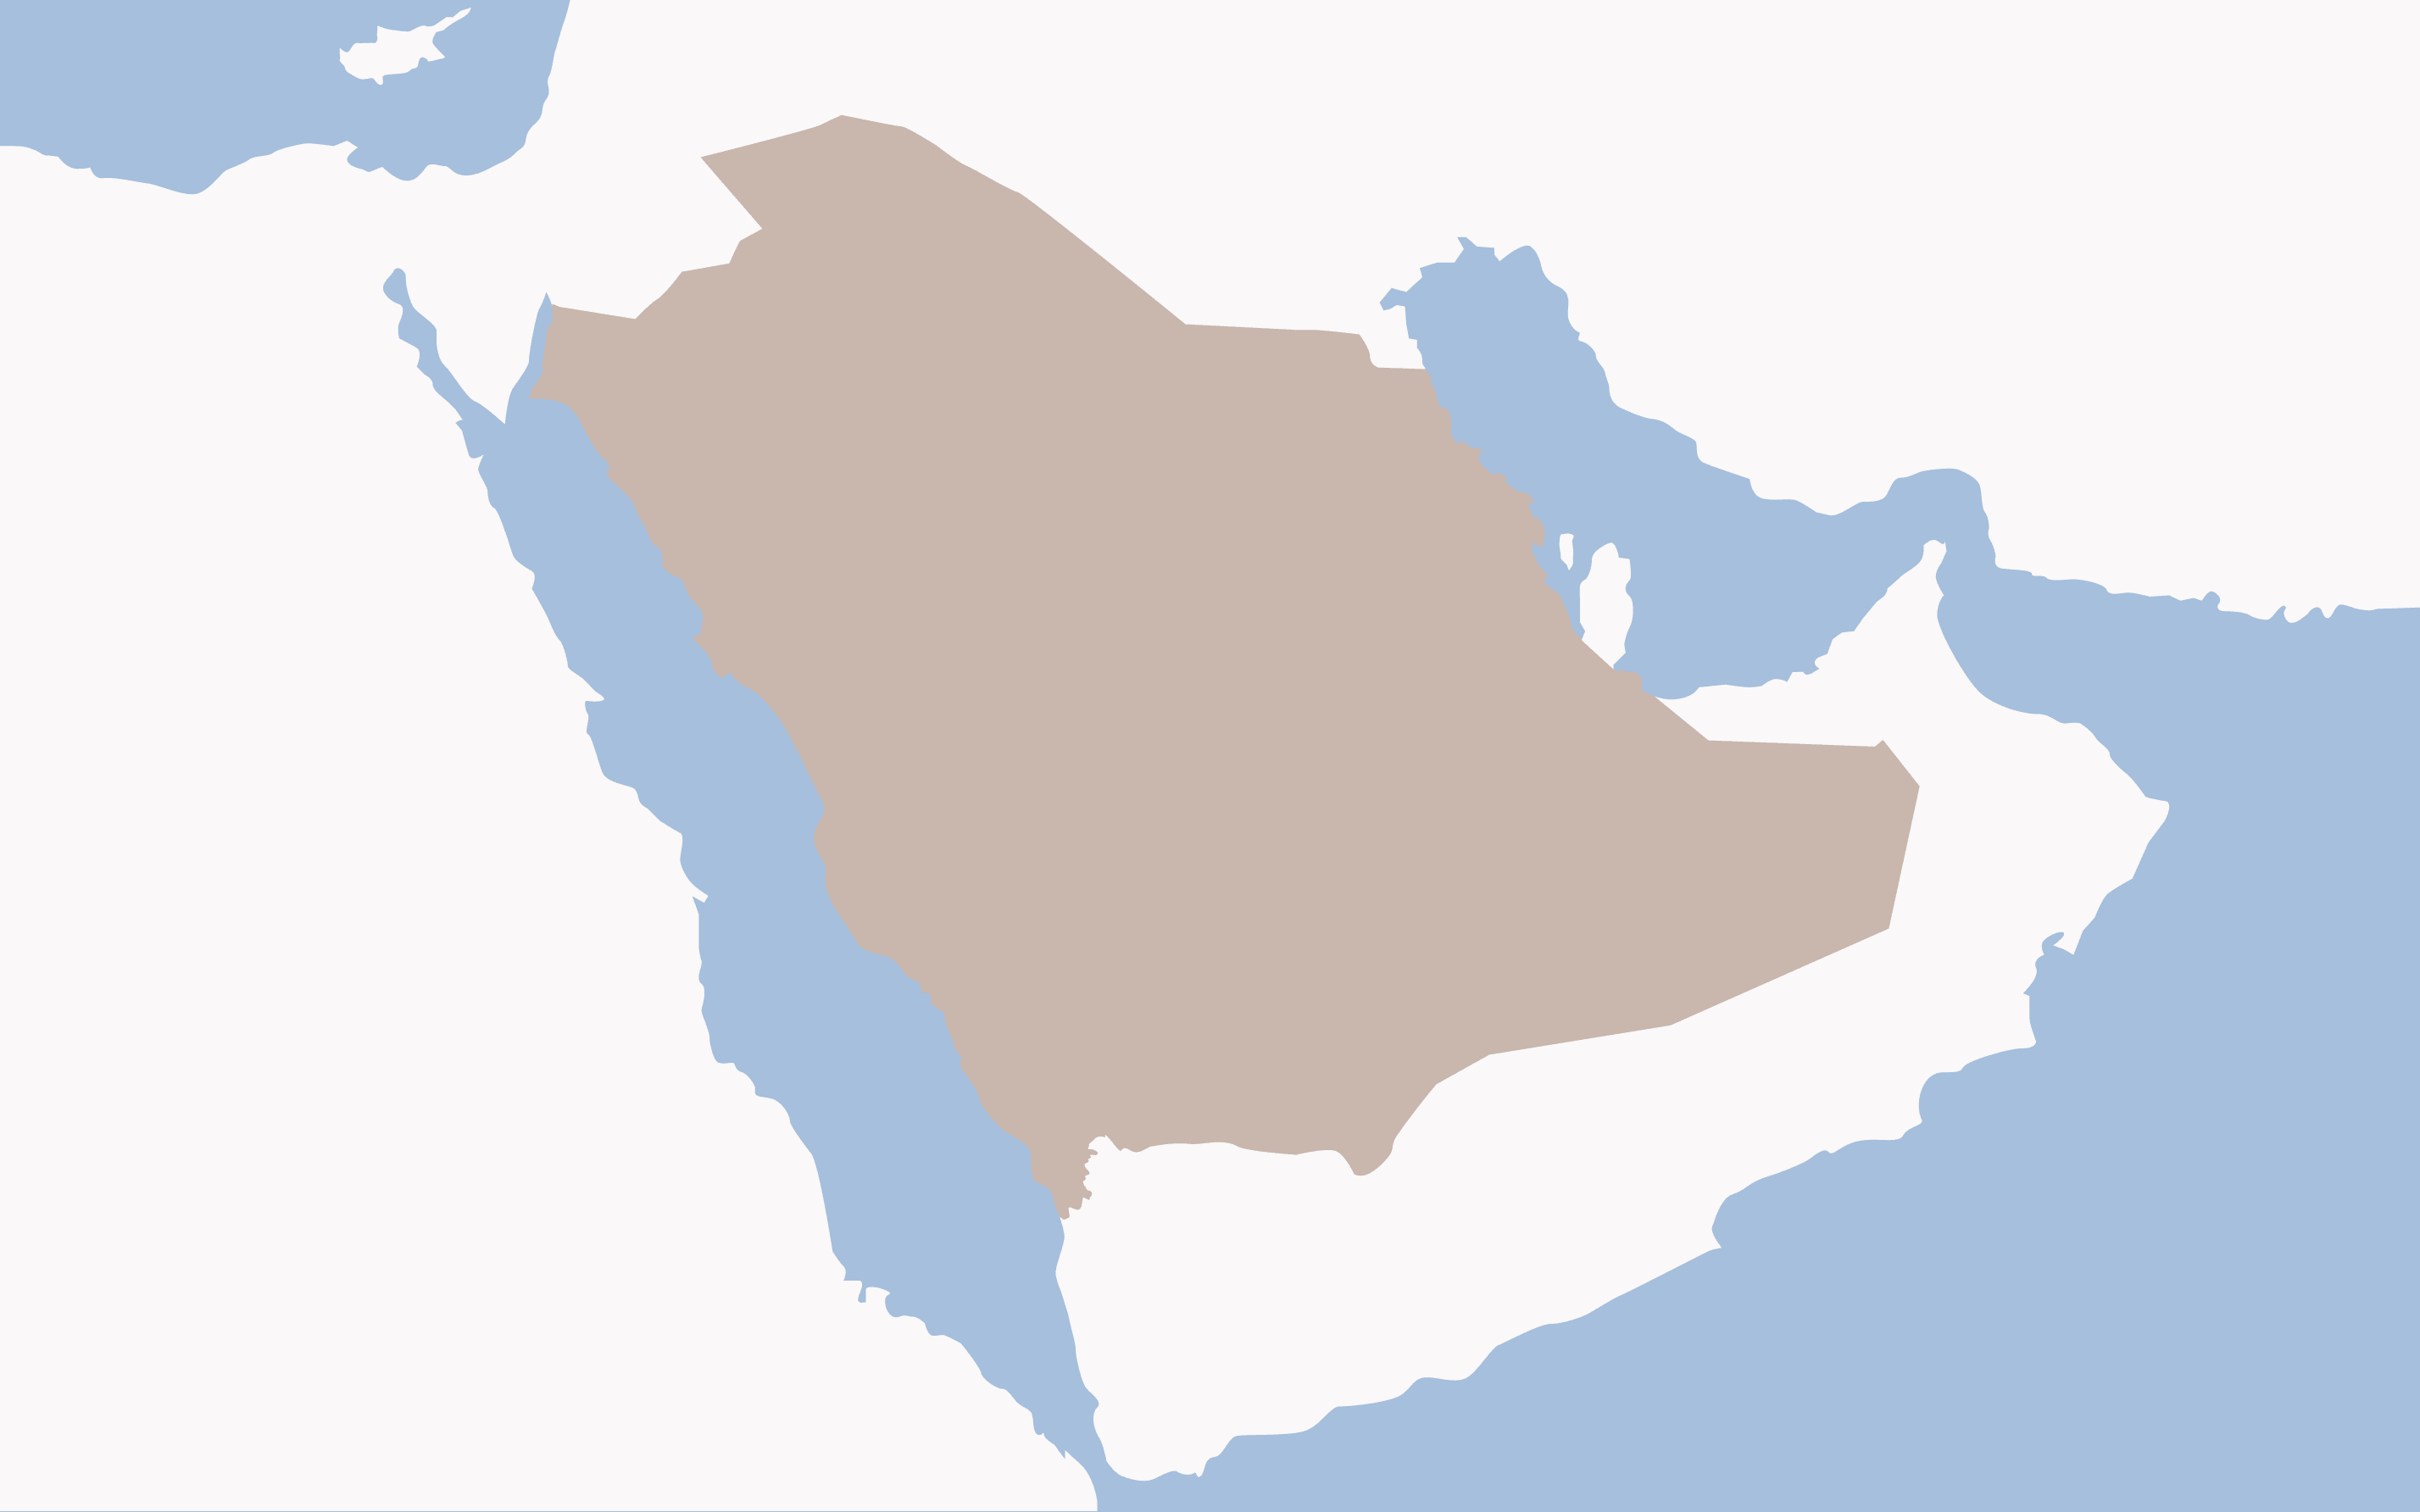 Saudi Blank Map Free Images At Clkercom Vector Clip Art. Saudi 